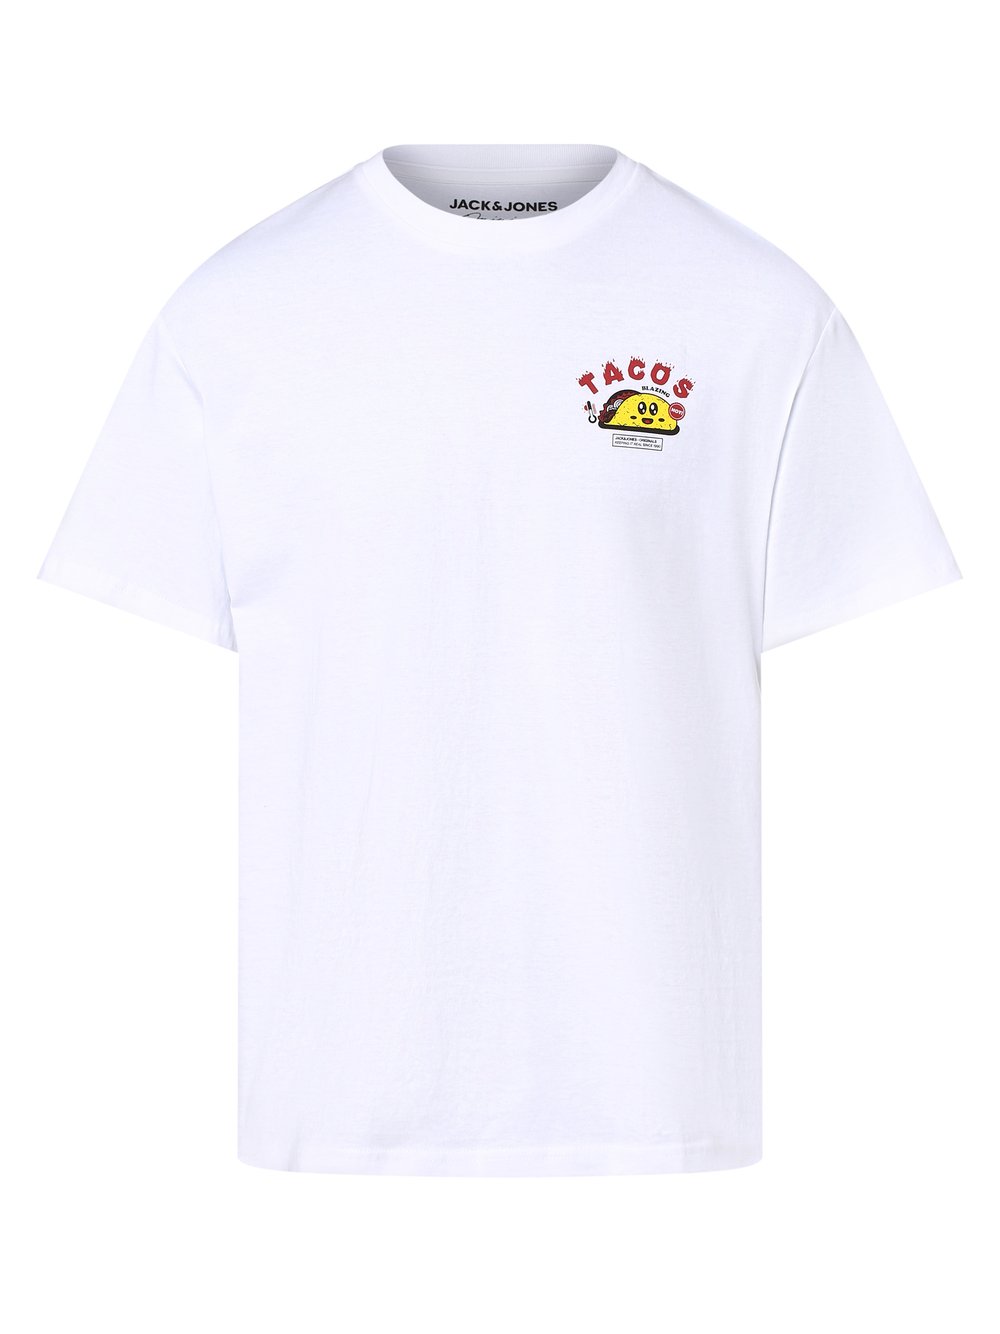 Jack & Jones - T-shirt męski  JORTaco, biały